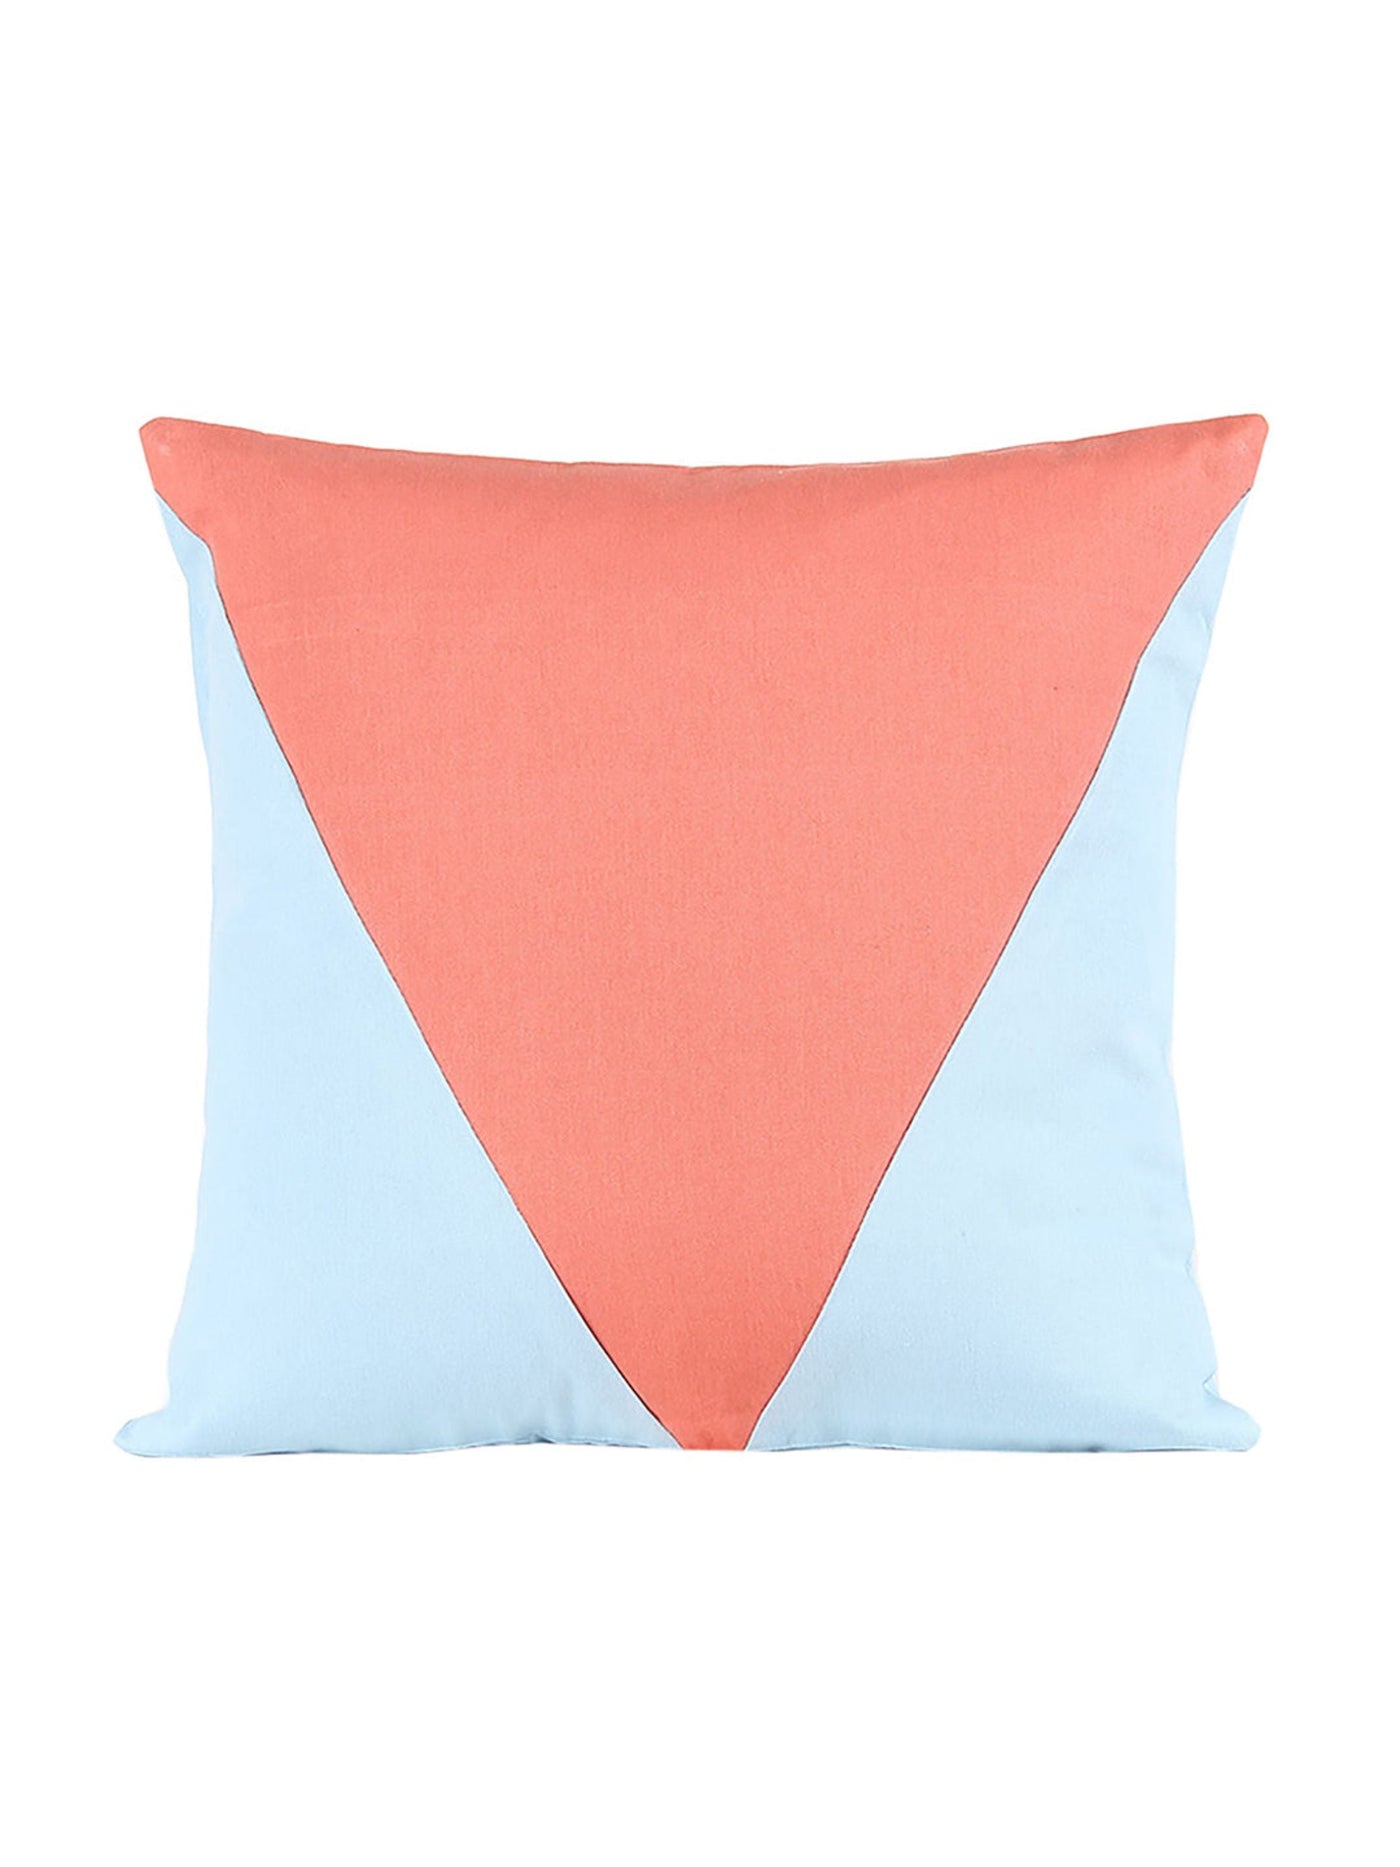 Cushion Cover - Bhumiti (Light Blue)